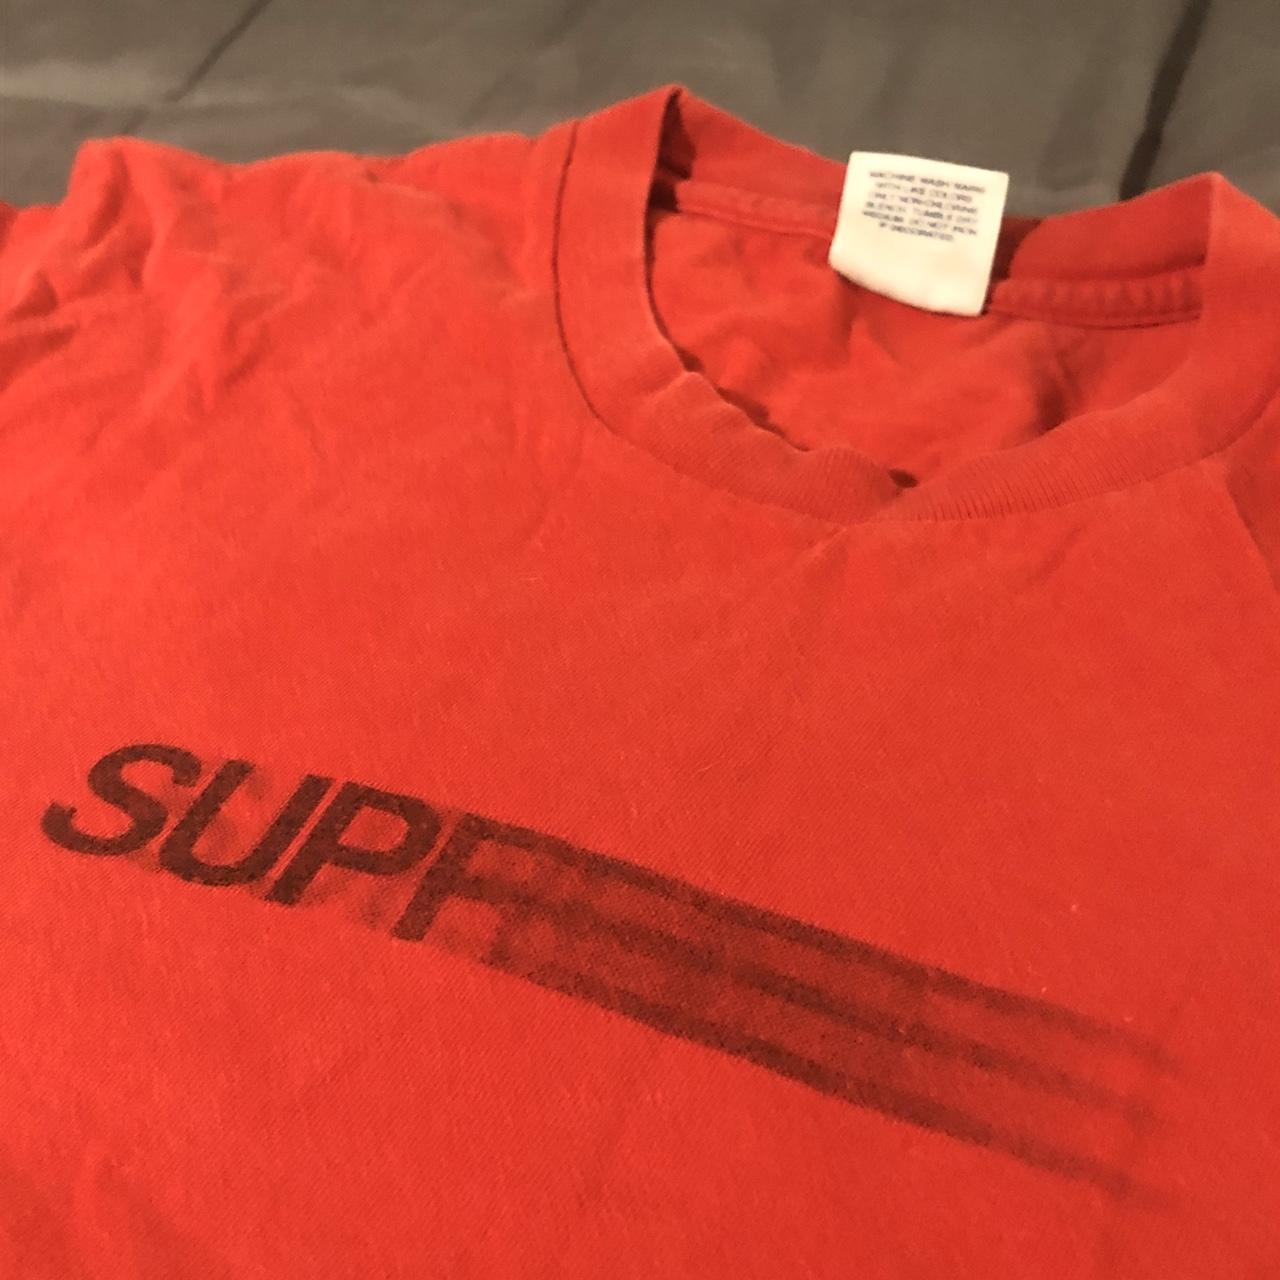 red supreme shirt